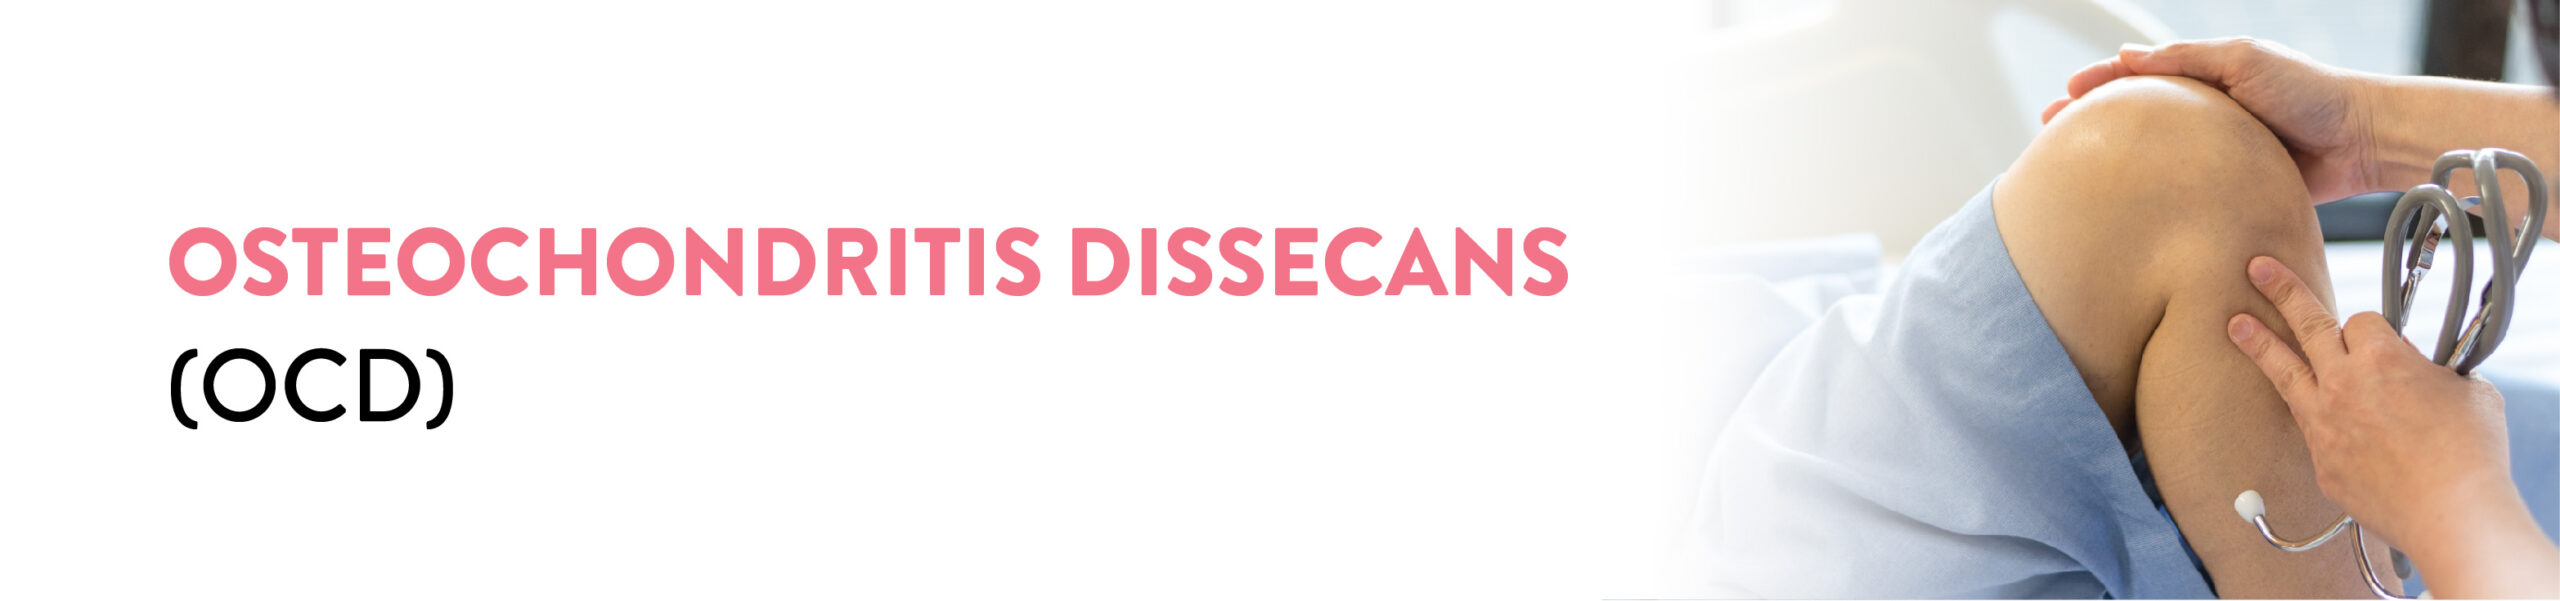 Osteochondritis-dissecans-OCD